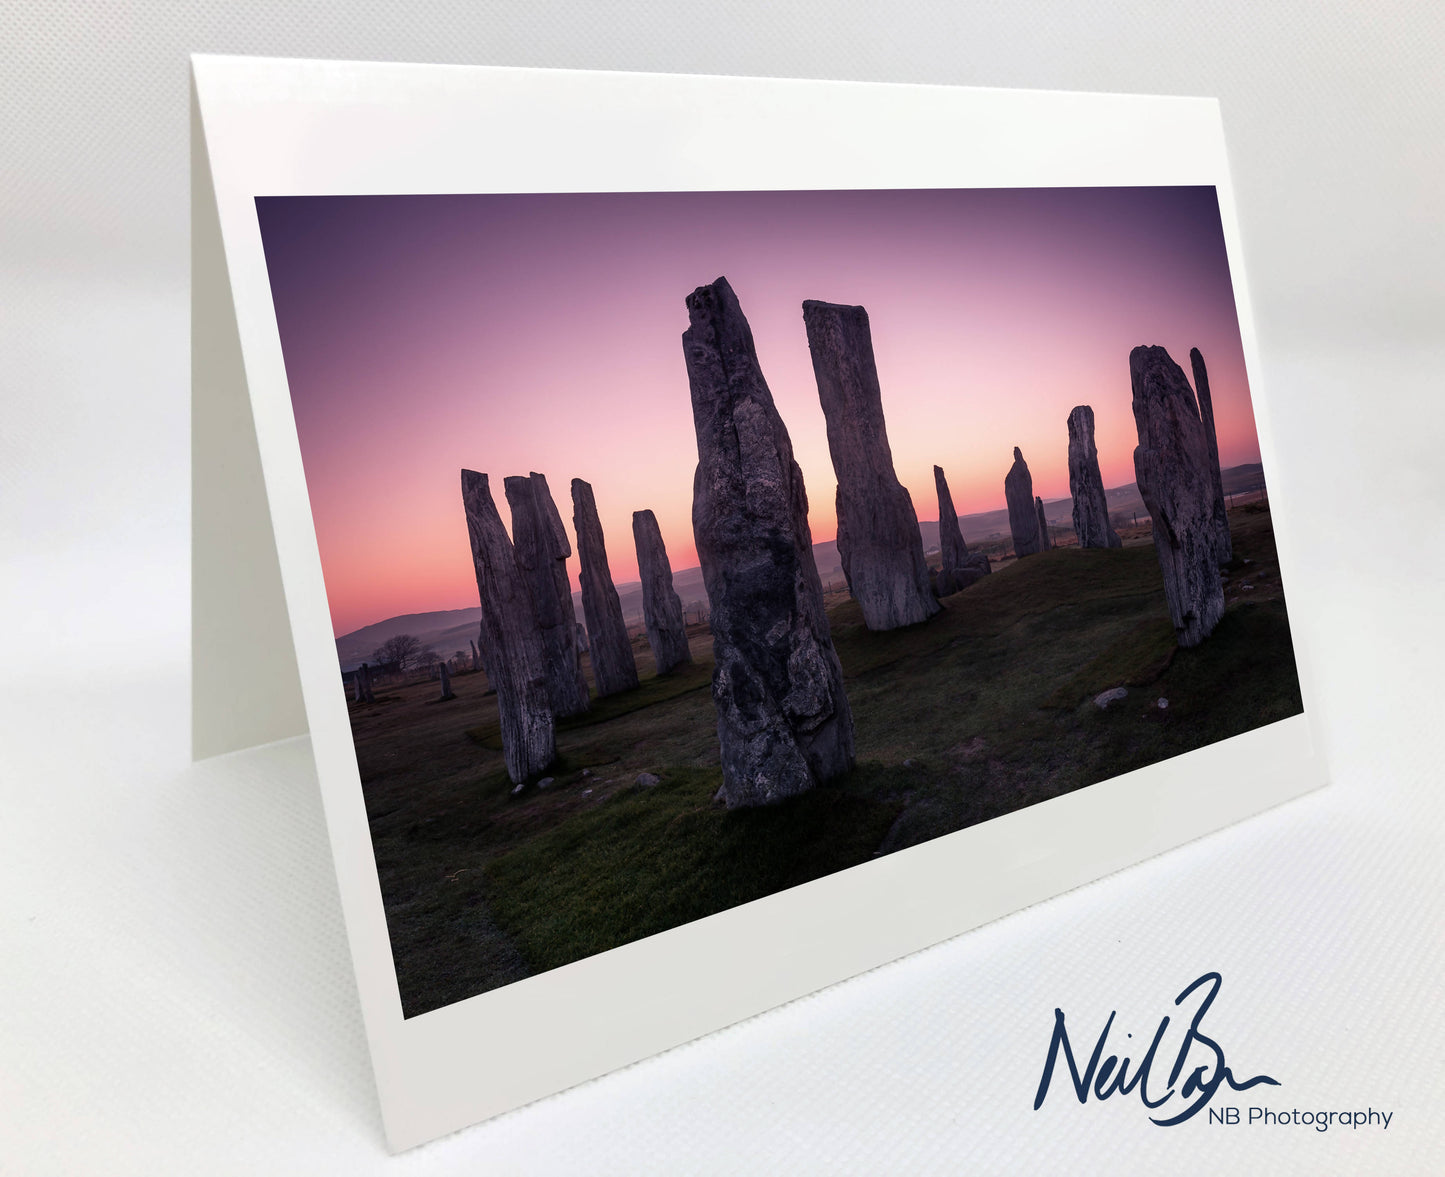 Callanish Stones Isle of Lewis - Scotland Greeting Card - Blank Inside